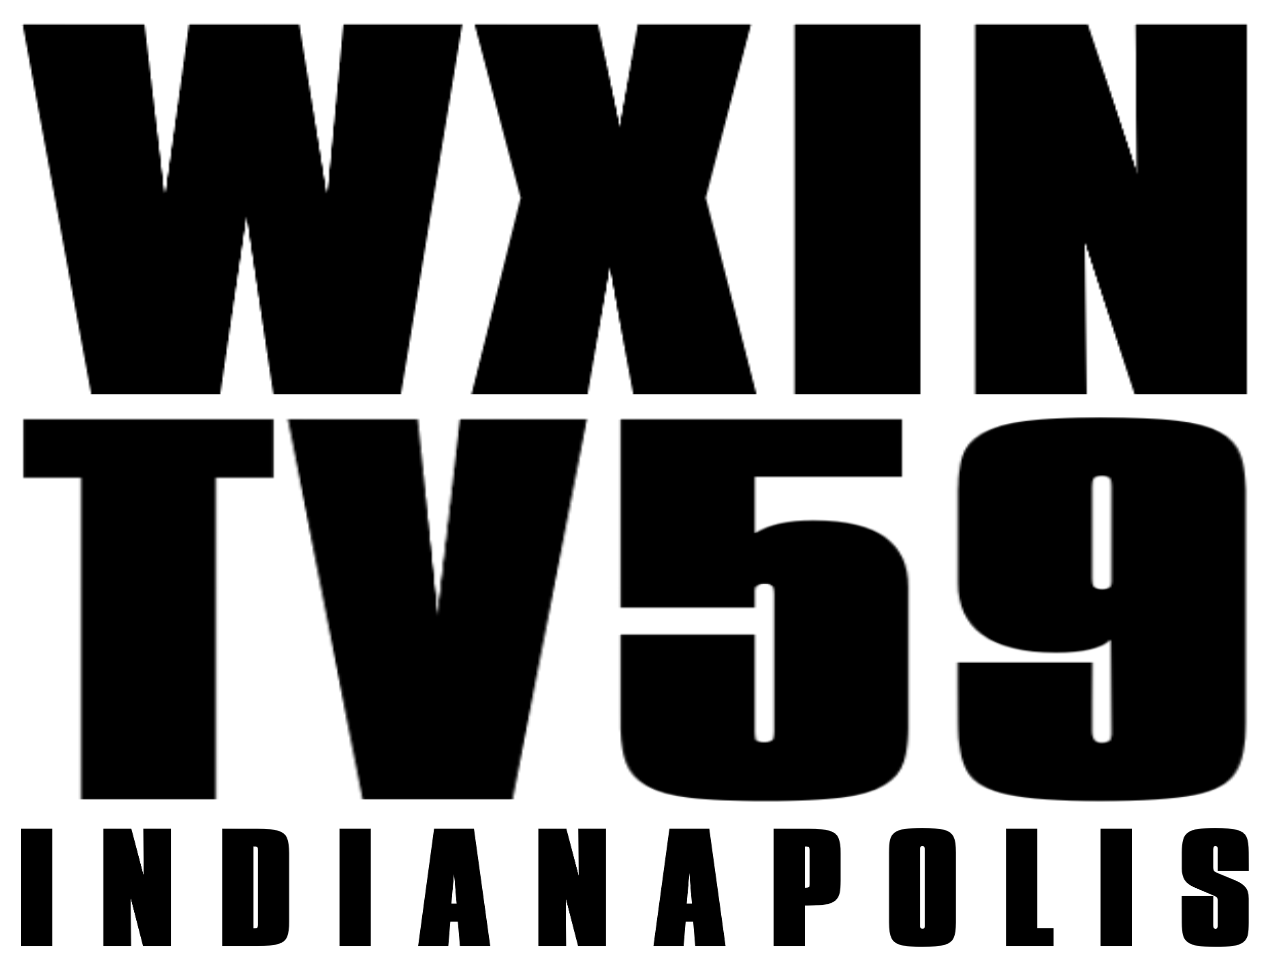 AlternateHistory.com's WXIN logo #1.png